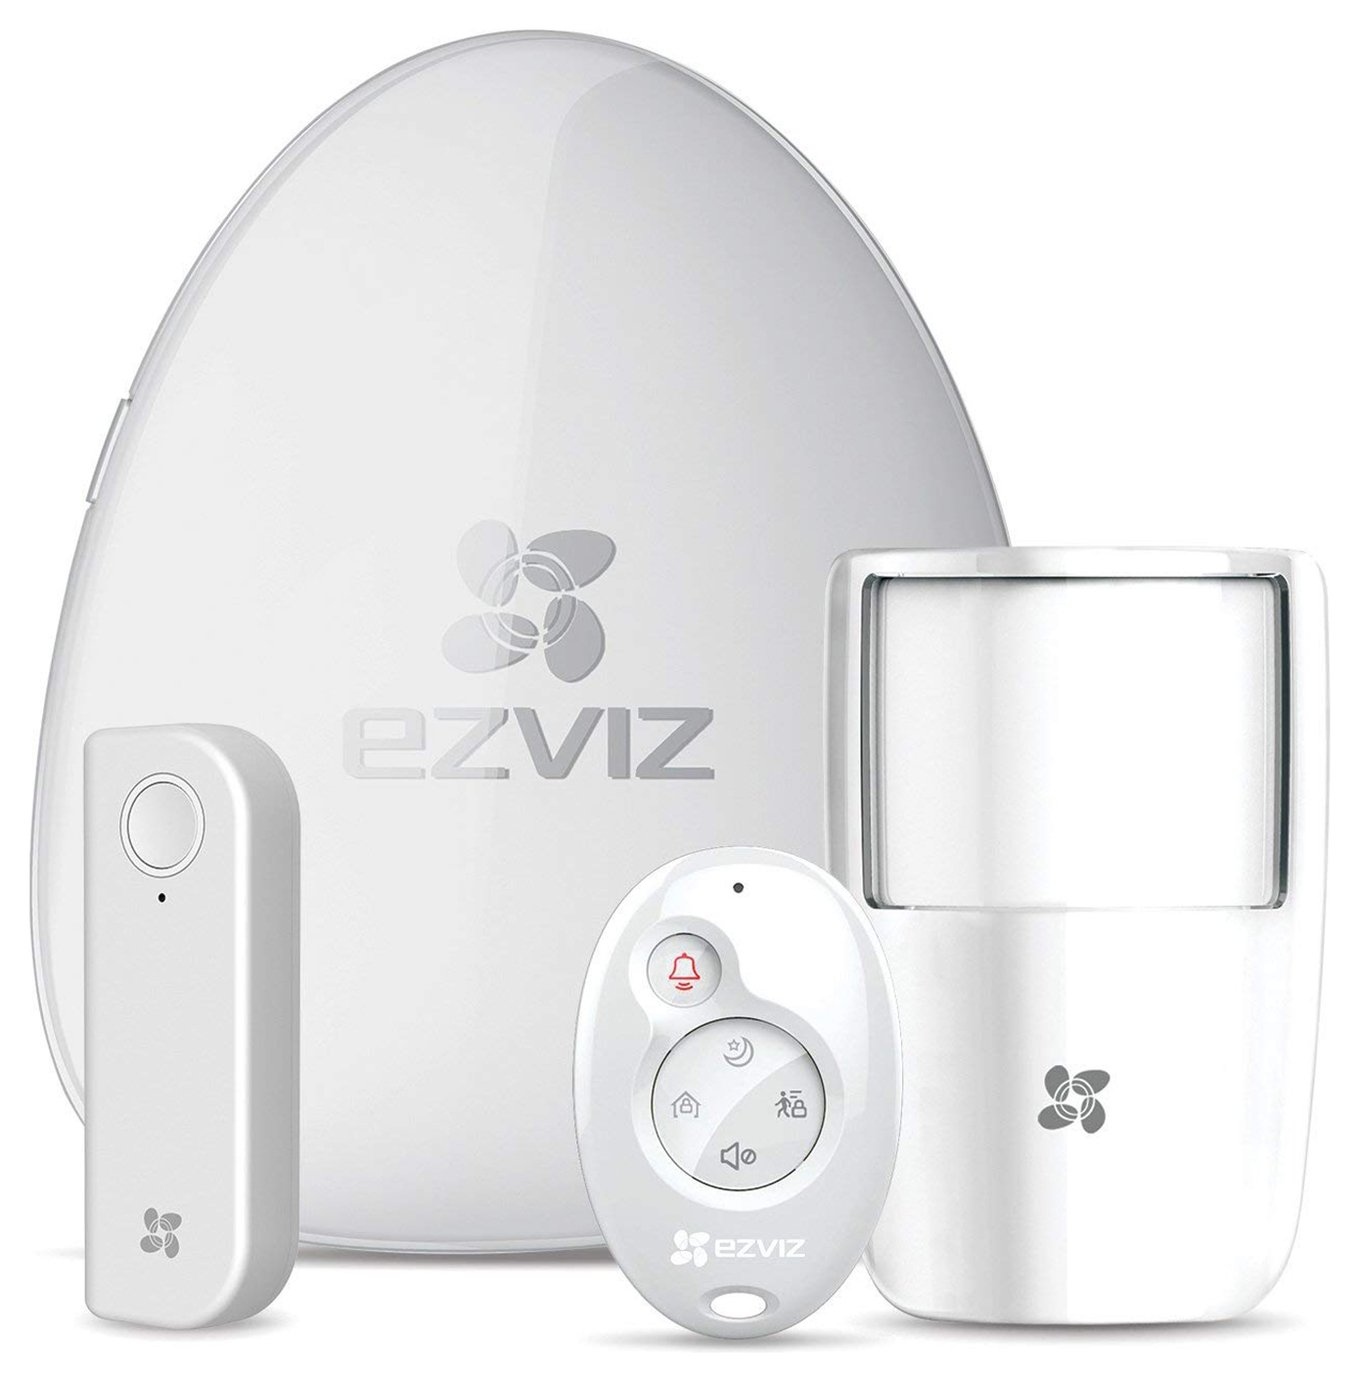 EZVIZ Wireless Smart Home Security Alarm Kit review